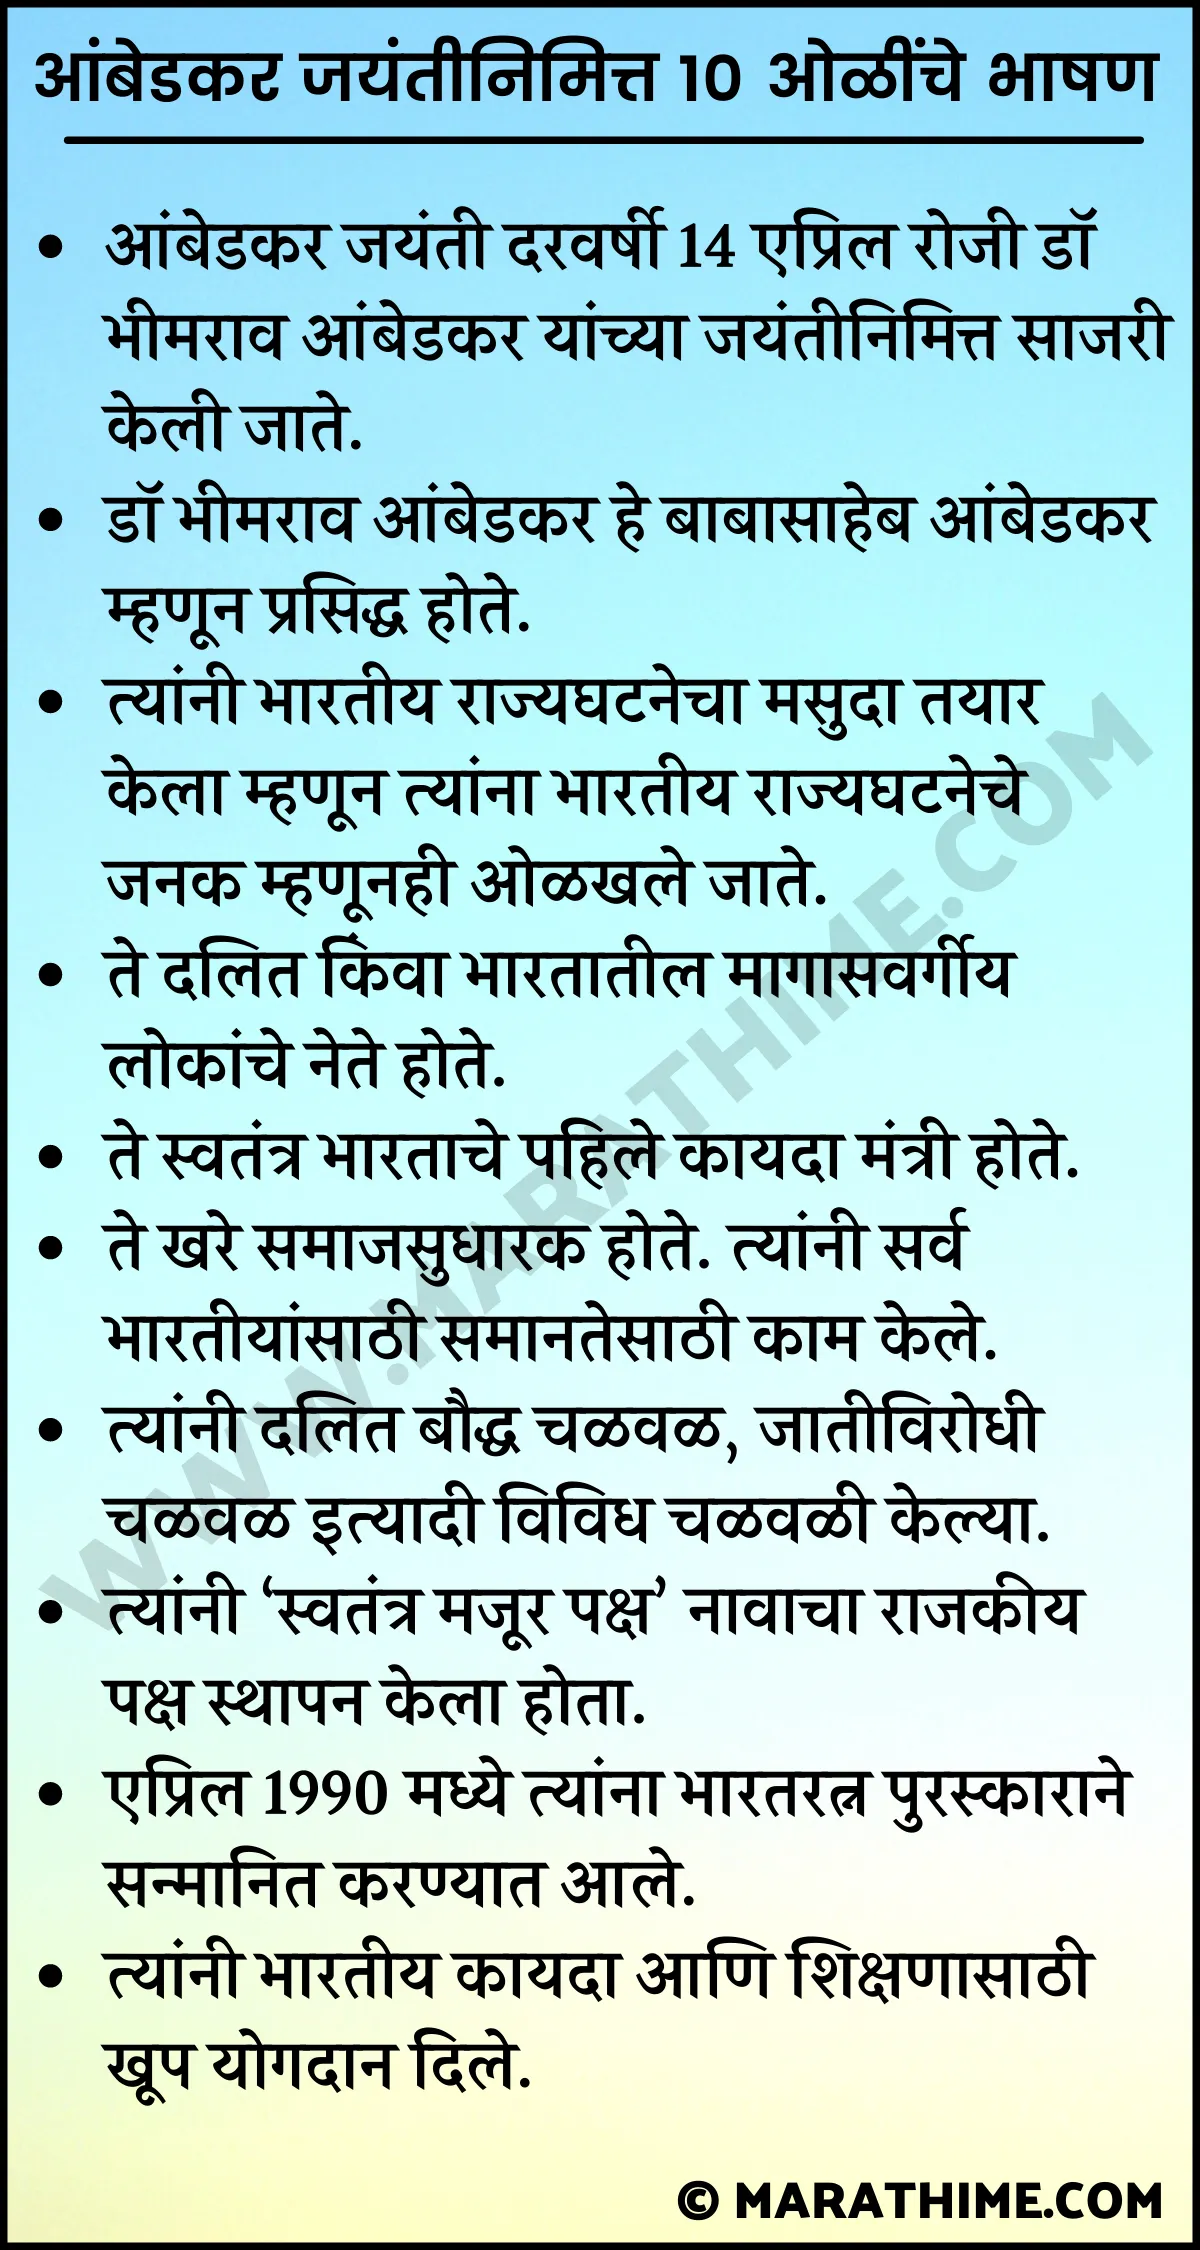 आंबेडकर जयंती निमित्त १० ओळींचे भाषण-10 Line Speech on Ambedkar Jayanti in Marathi